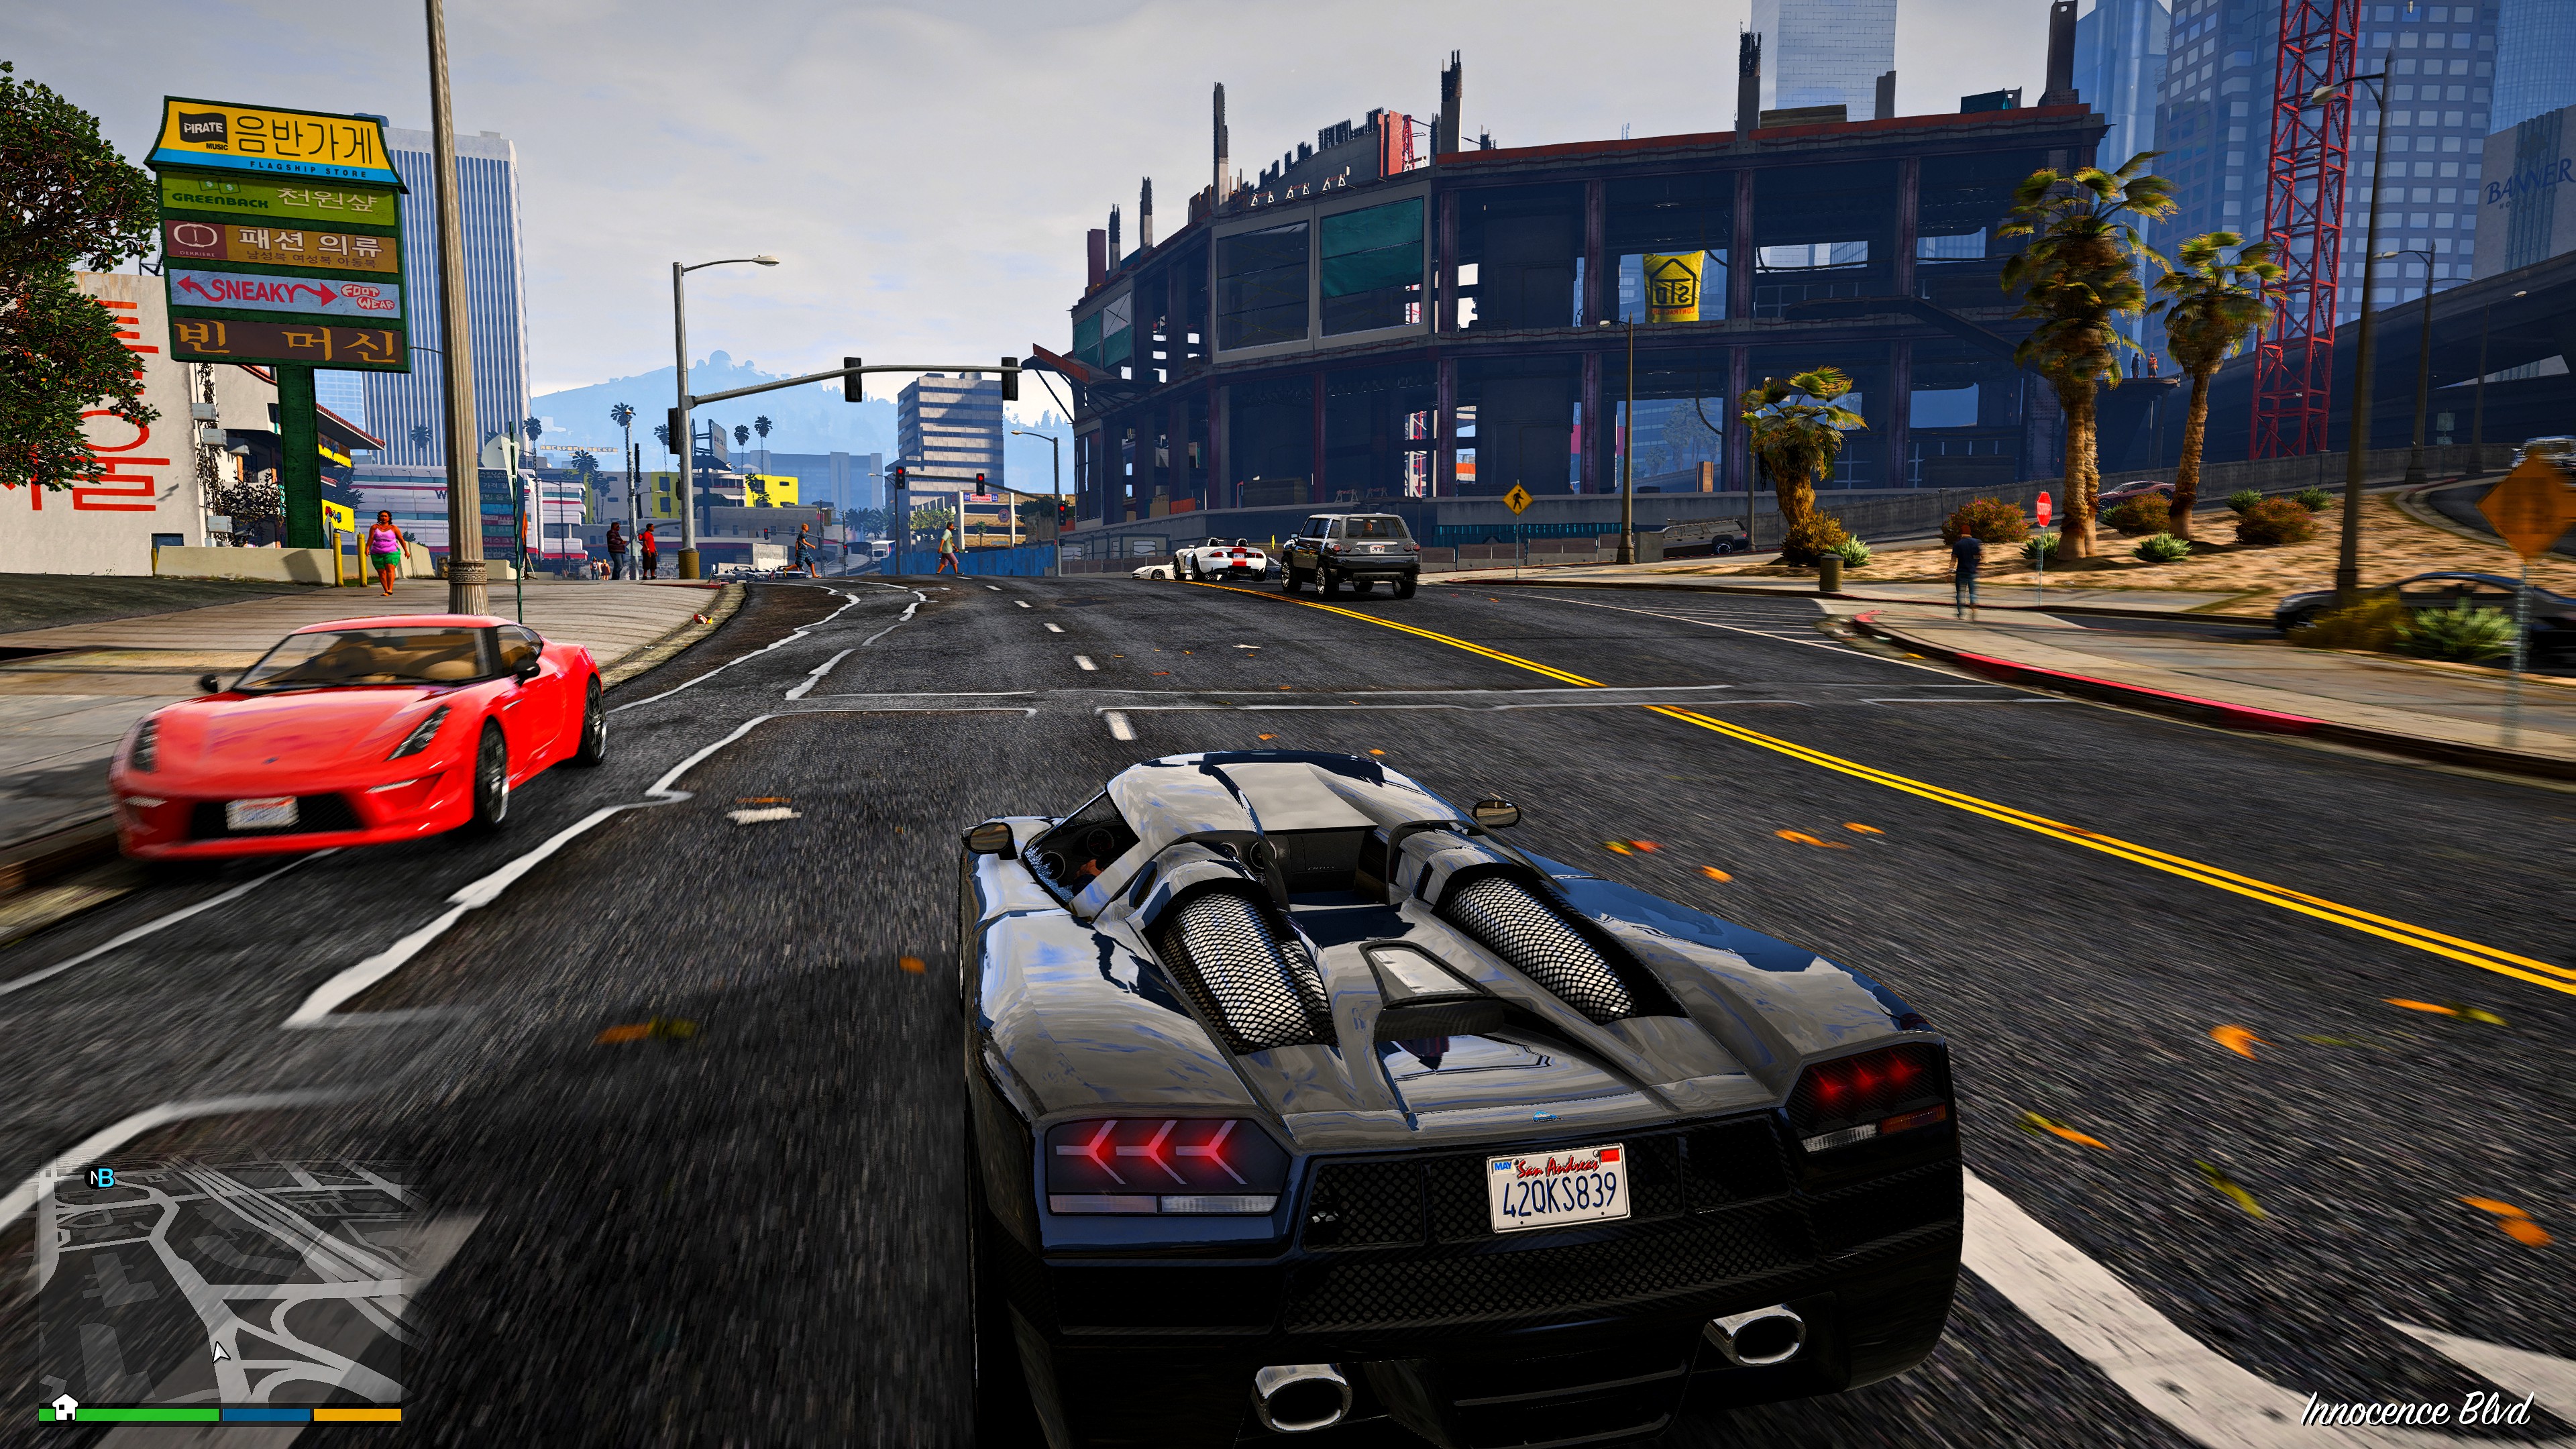 Date Prevu Sortie Gta 6 GTA 6 : Date de sortie du prochain Grand Theft Auto - Breakflip